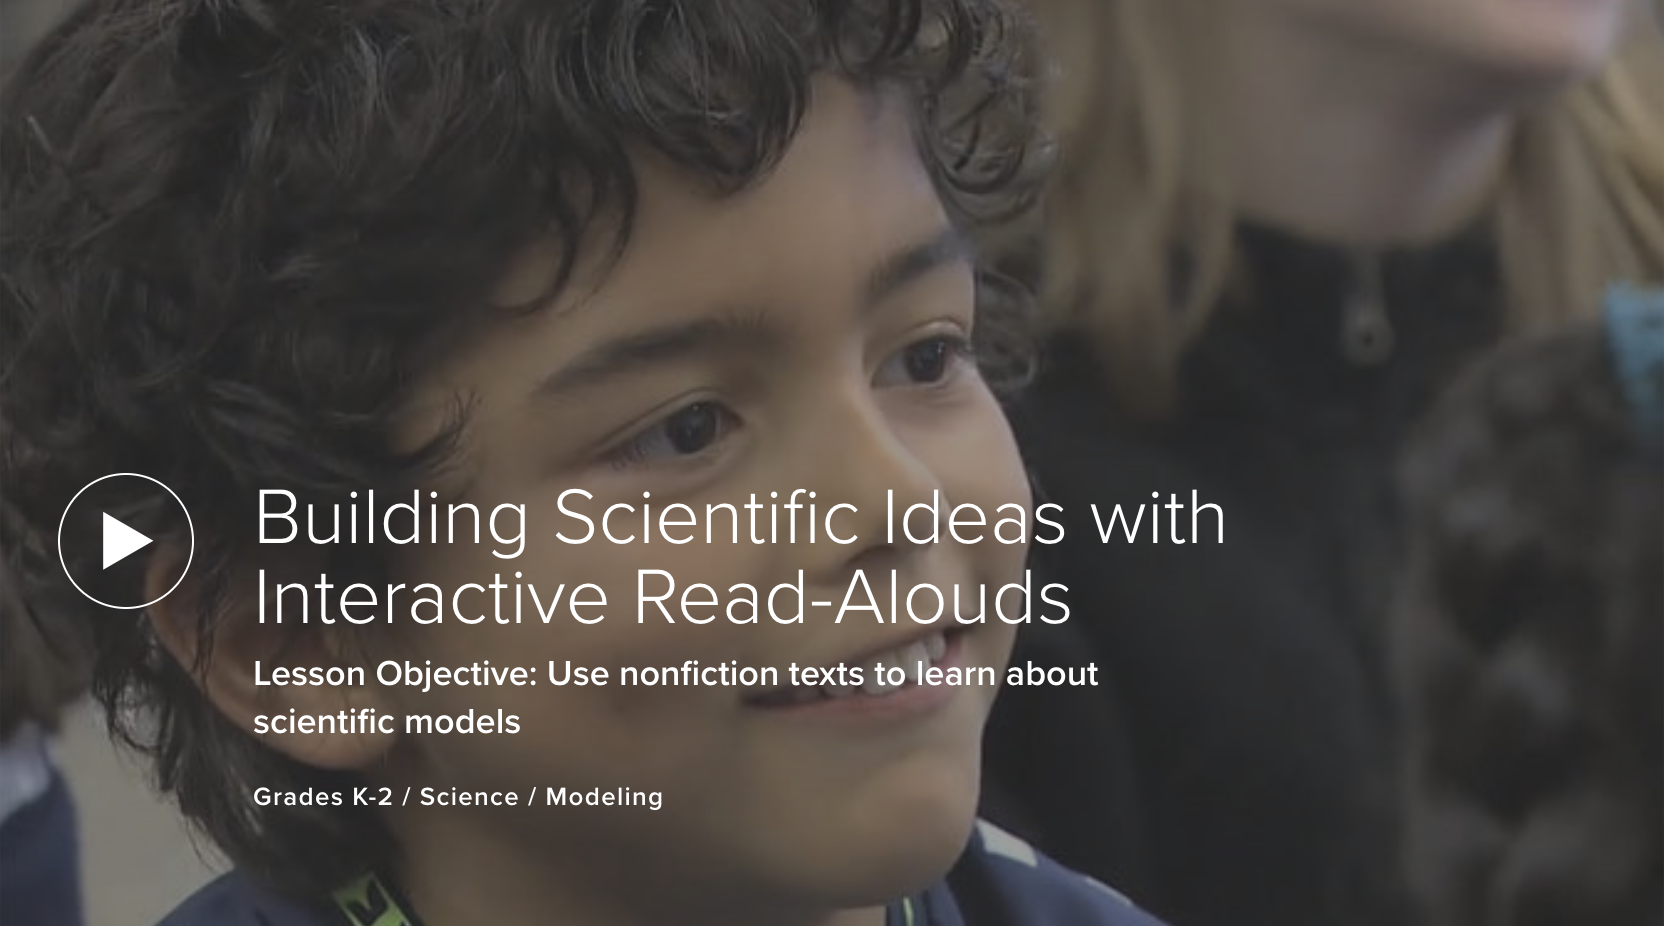  Building Scientific Ideas with Interactive Read-Alouds